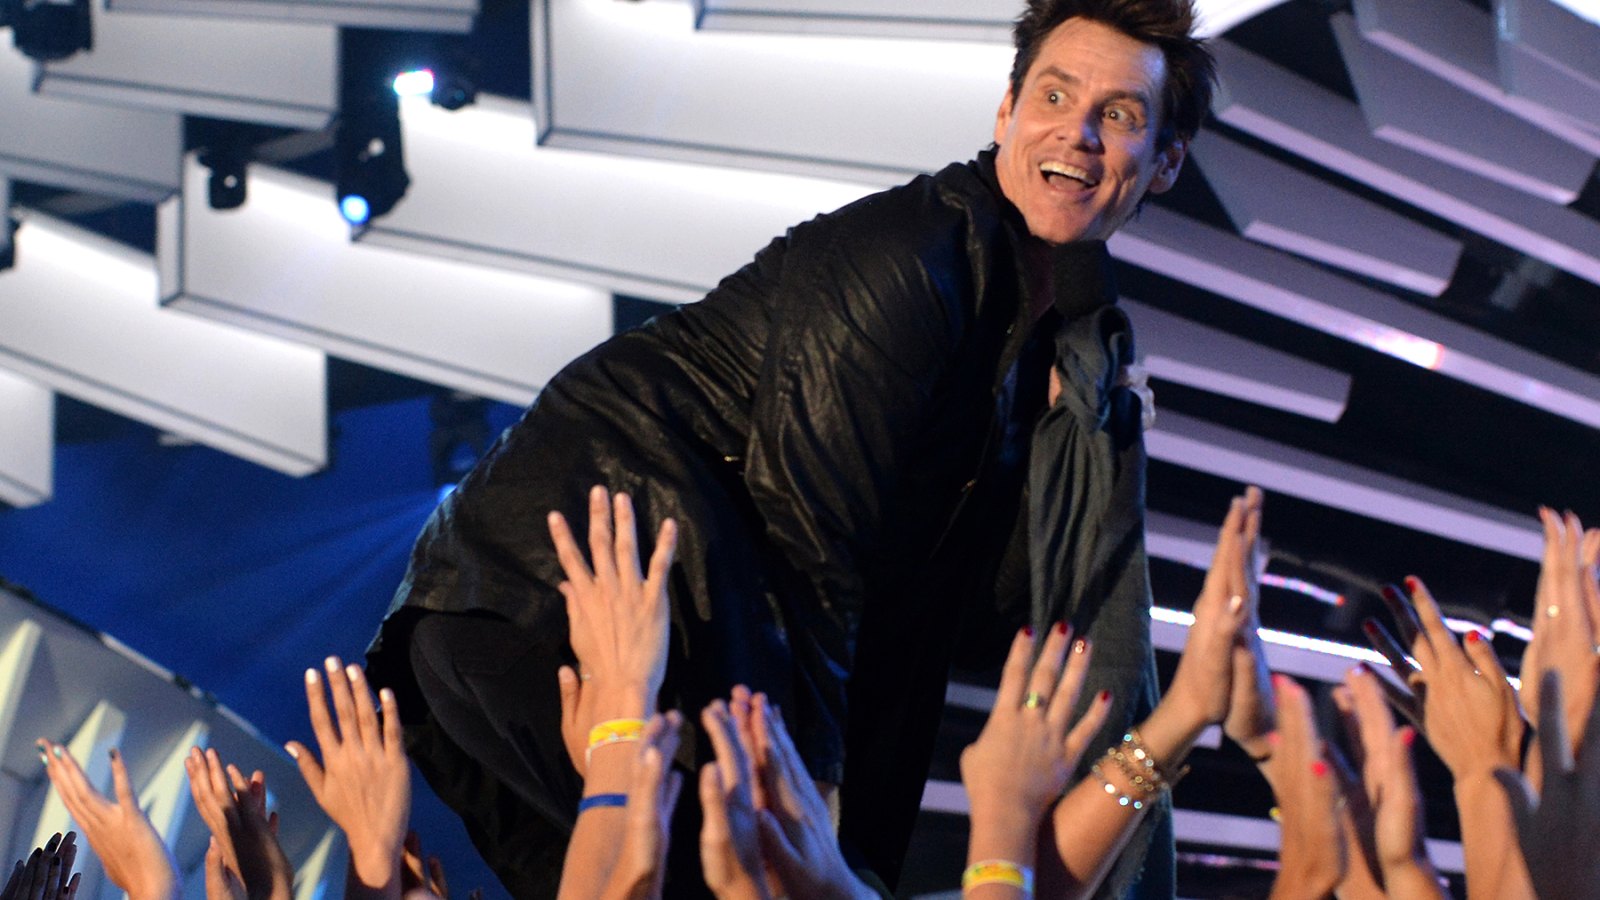 Jim Carrey falls at the MTV VMAs